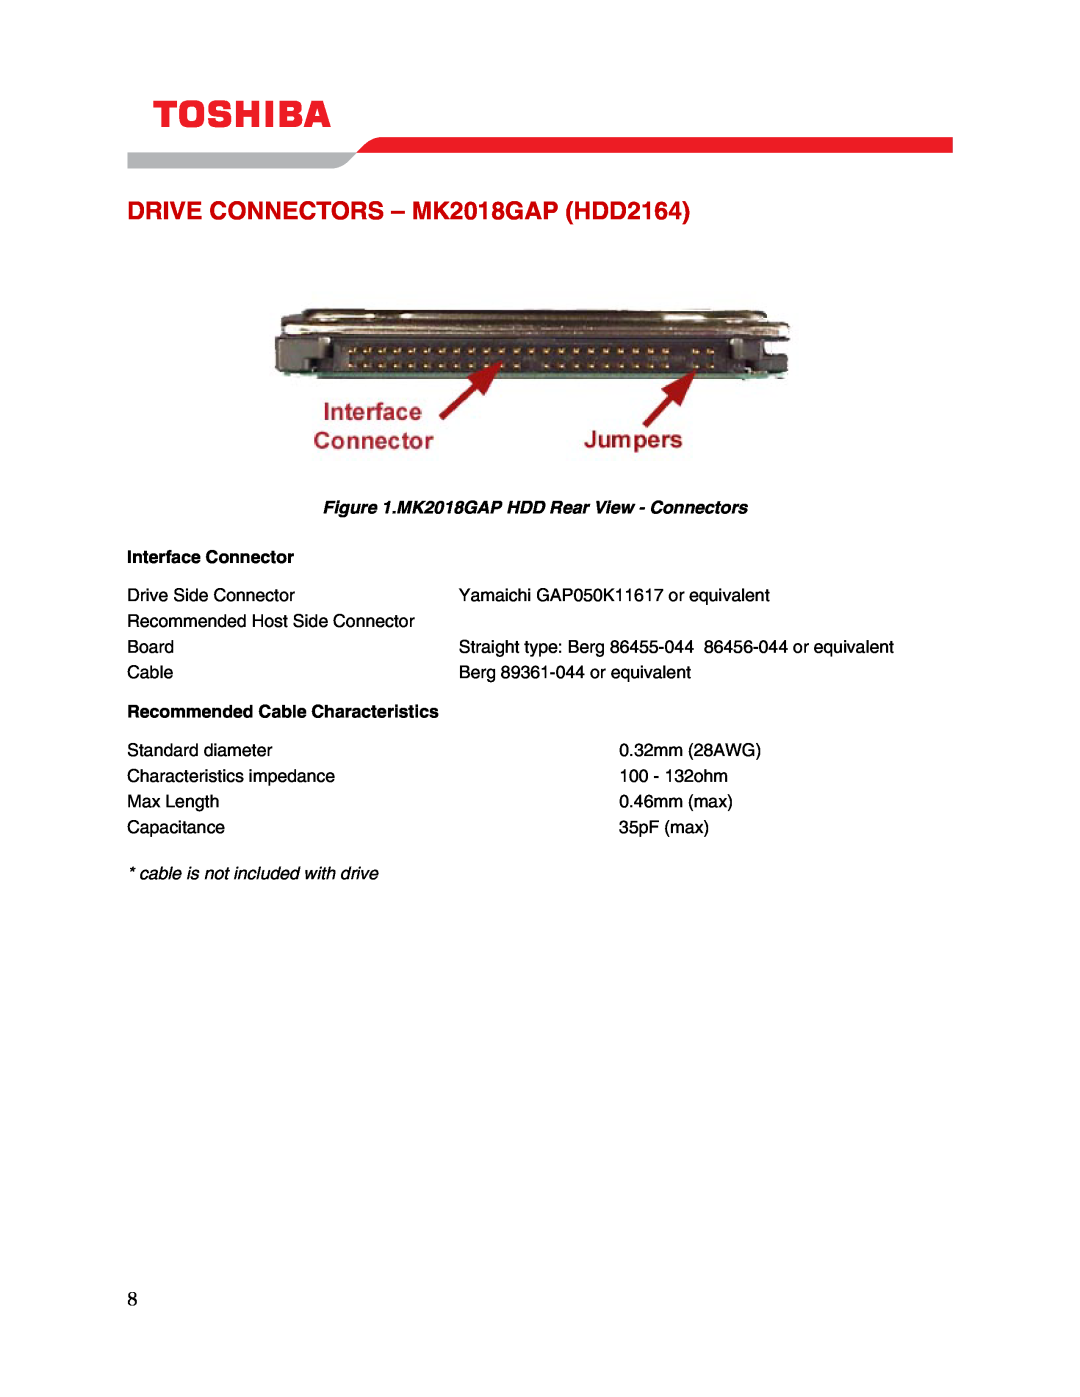 Toshiba user manual DRIVE CONNECTORS - MK2018GAP HDD2164, MK2018GAP HDD Rear View - Connectors, Interface Connector 